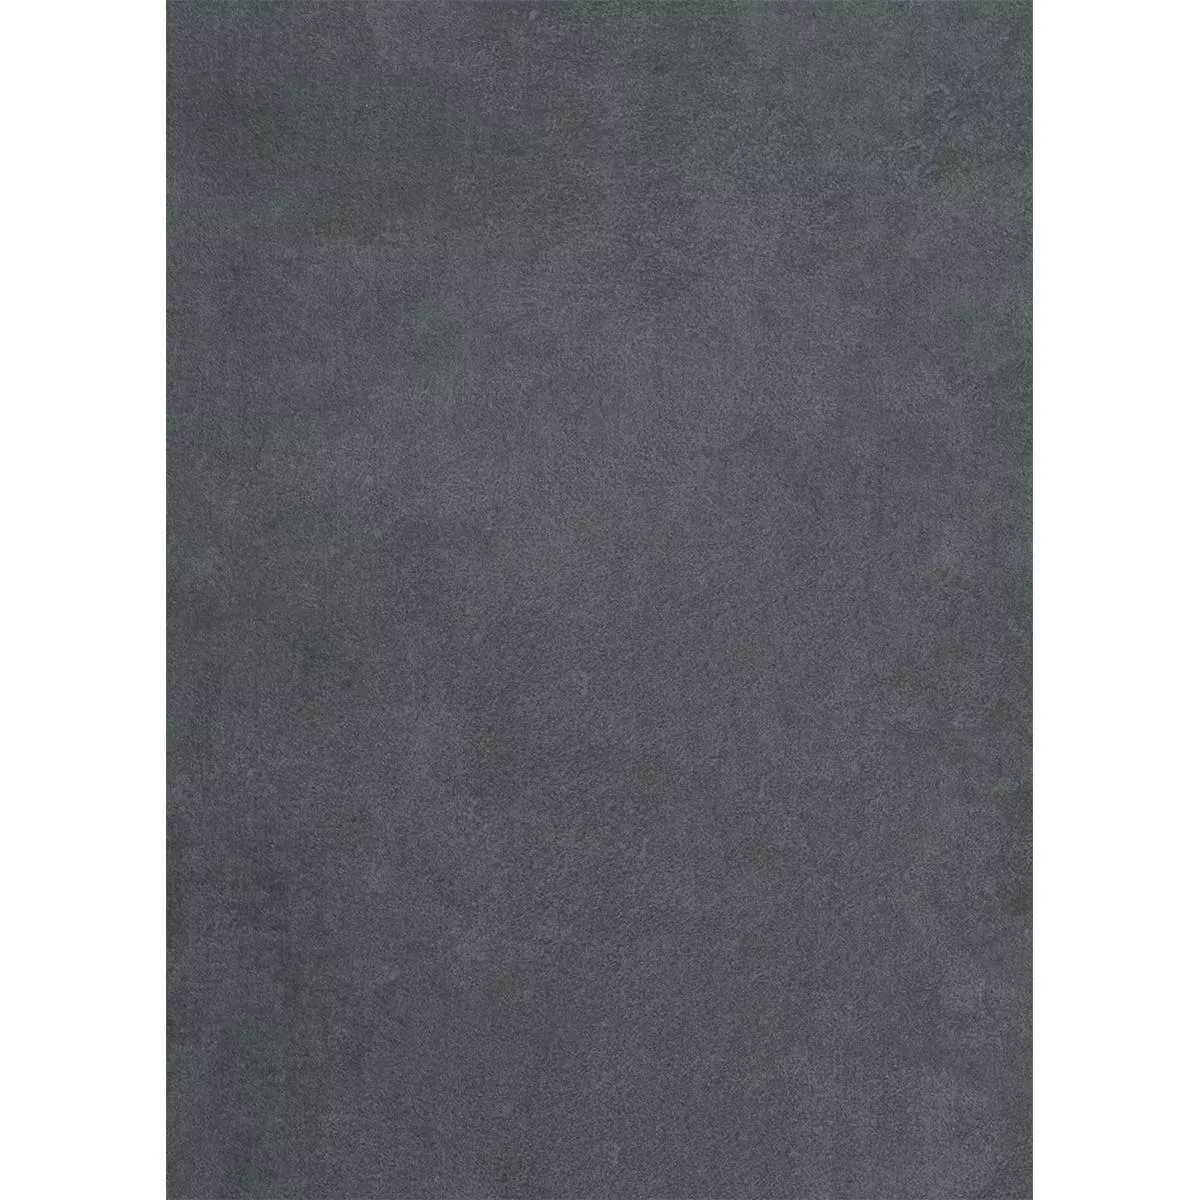 Tерасовидни Плочи Порцеланови Kаменинови Изделия Herzford Антрацит 60x120x2cm